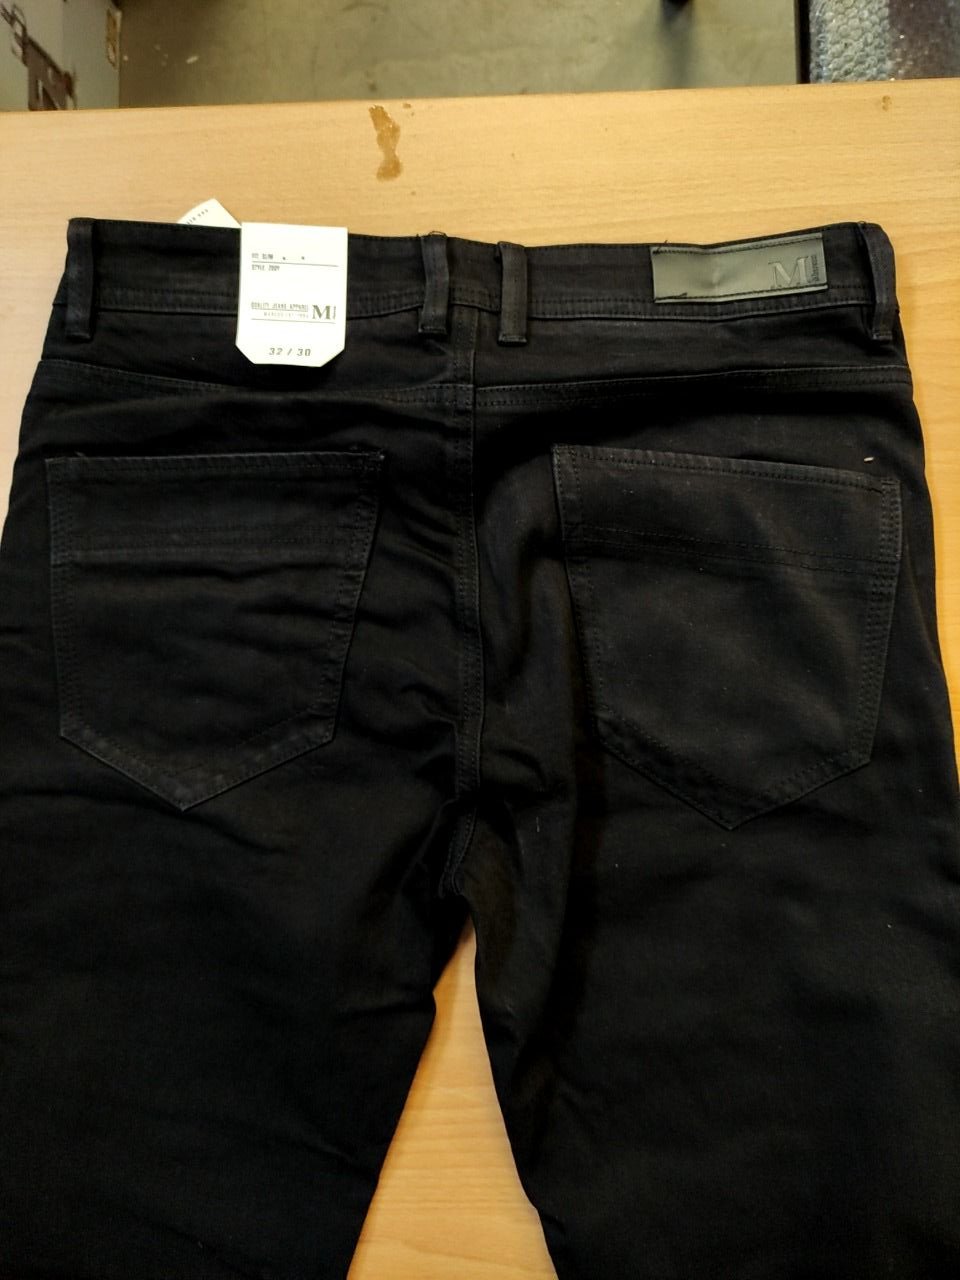 Riflové kalhoty černé barvy Marcus vel. 32. 30